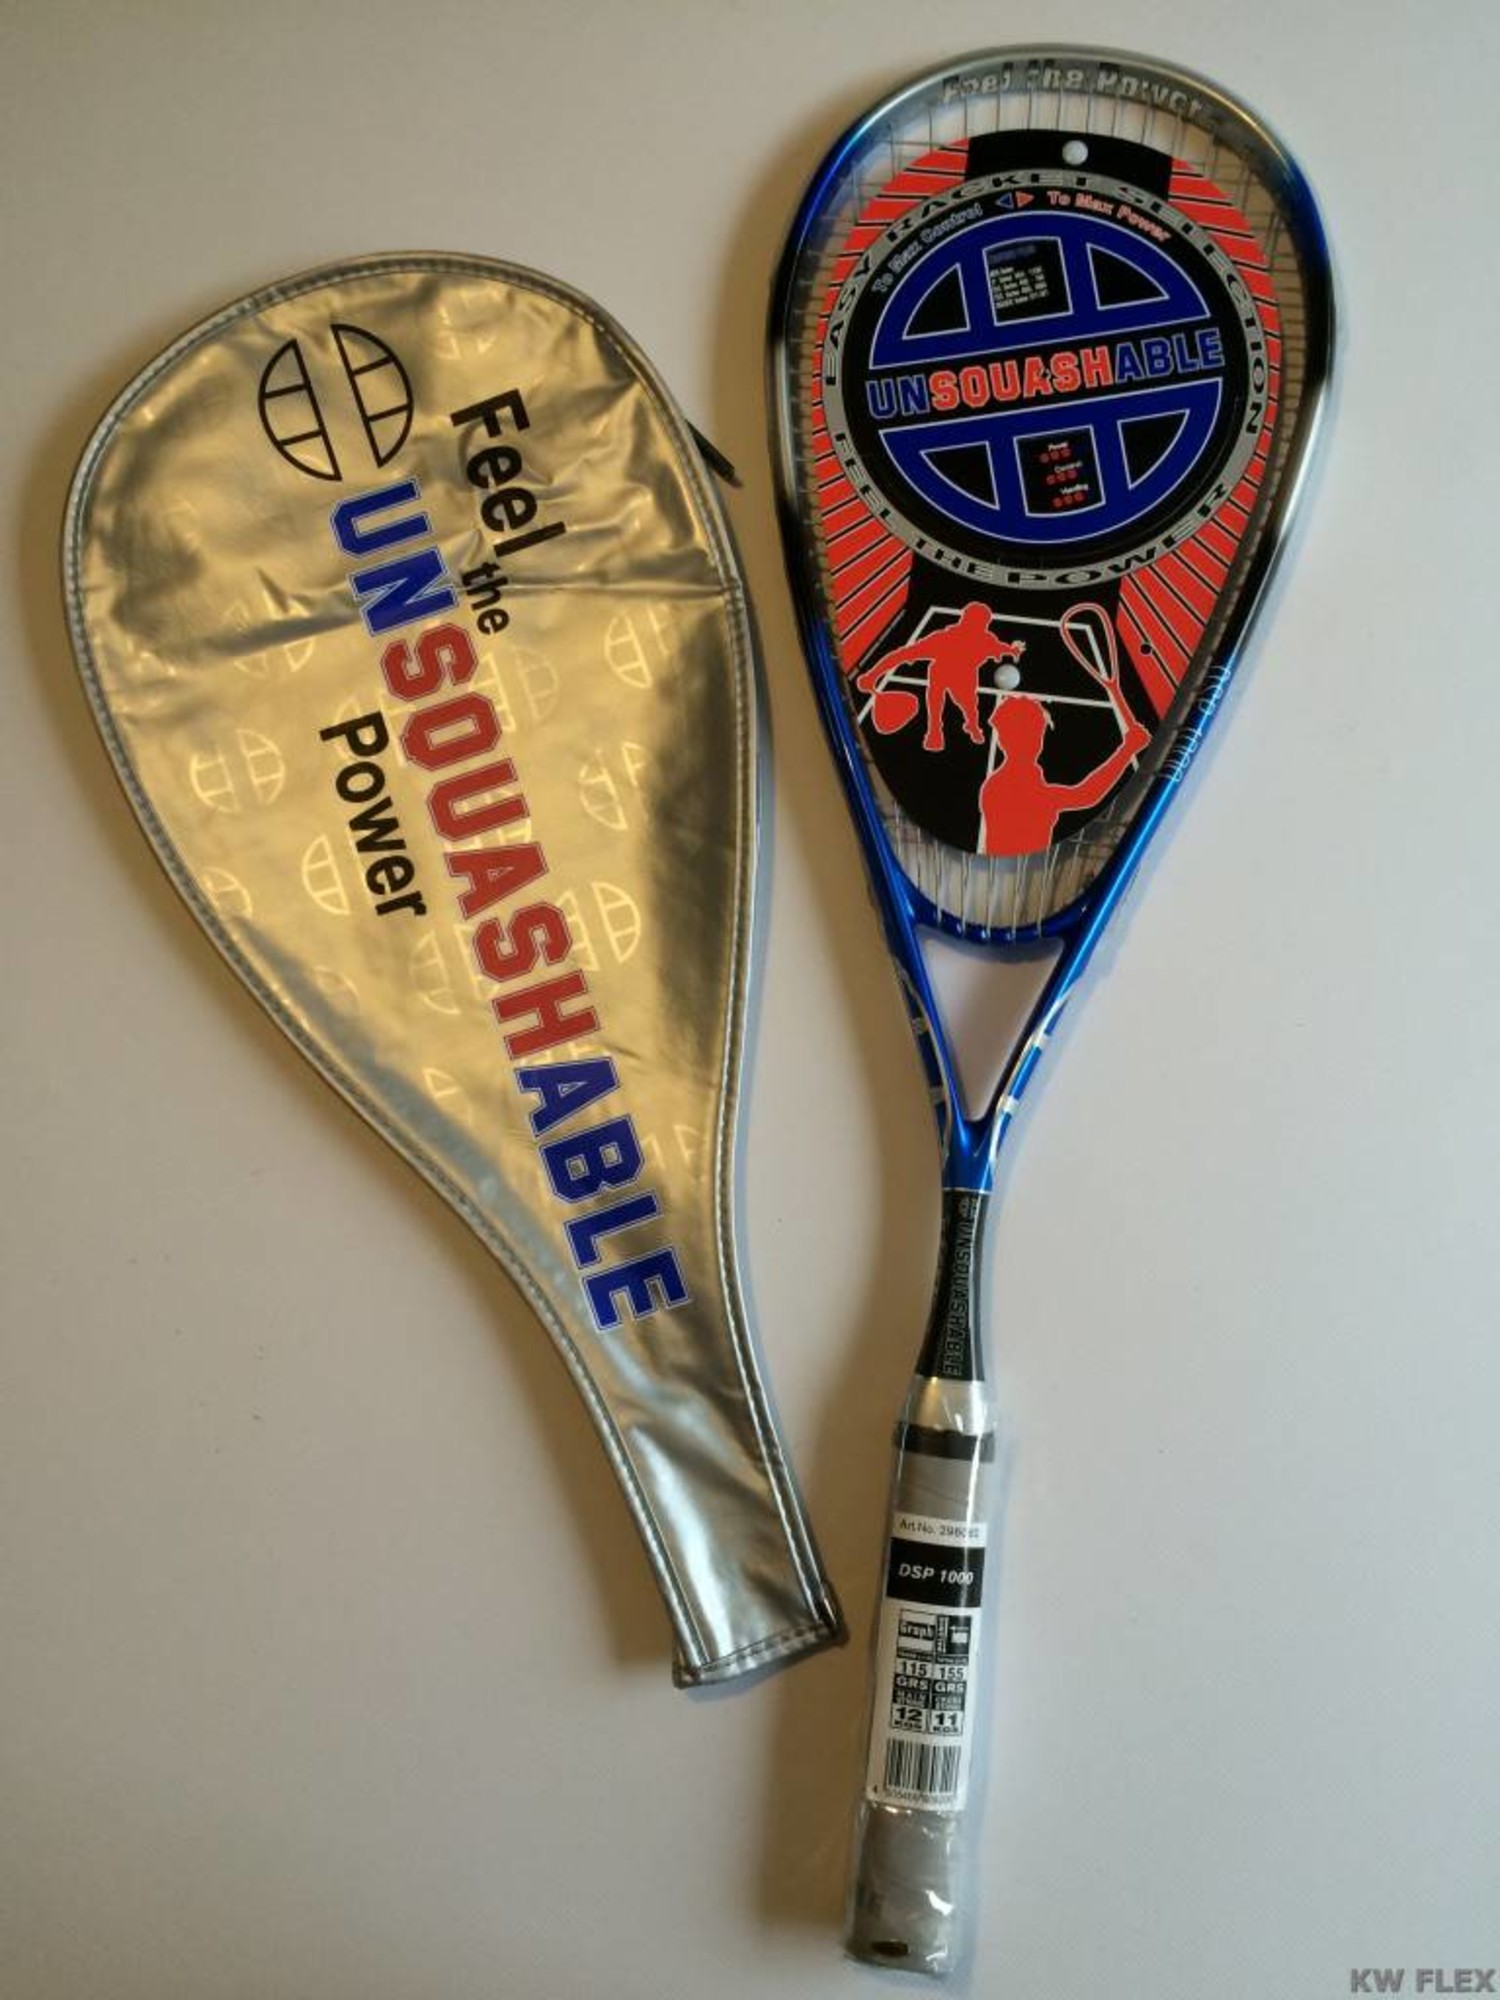 1000 squashracket - KW FLEX racket speciaalzaak